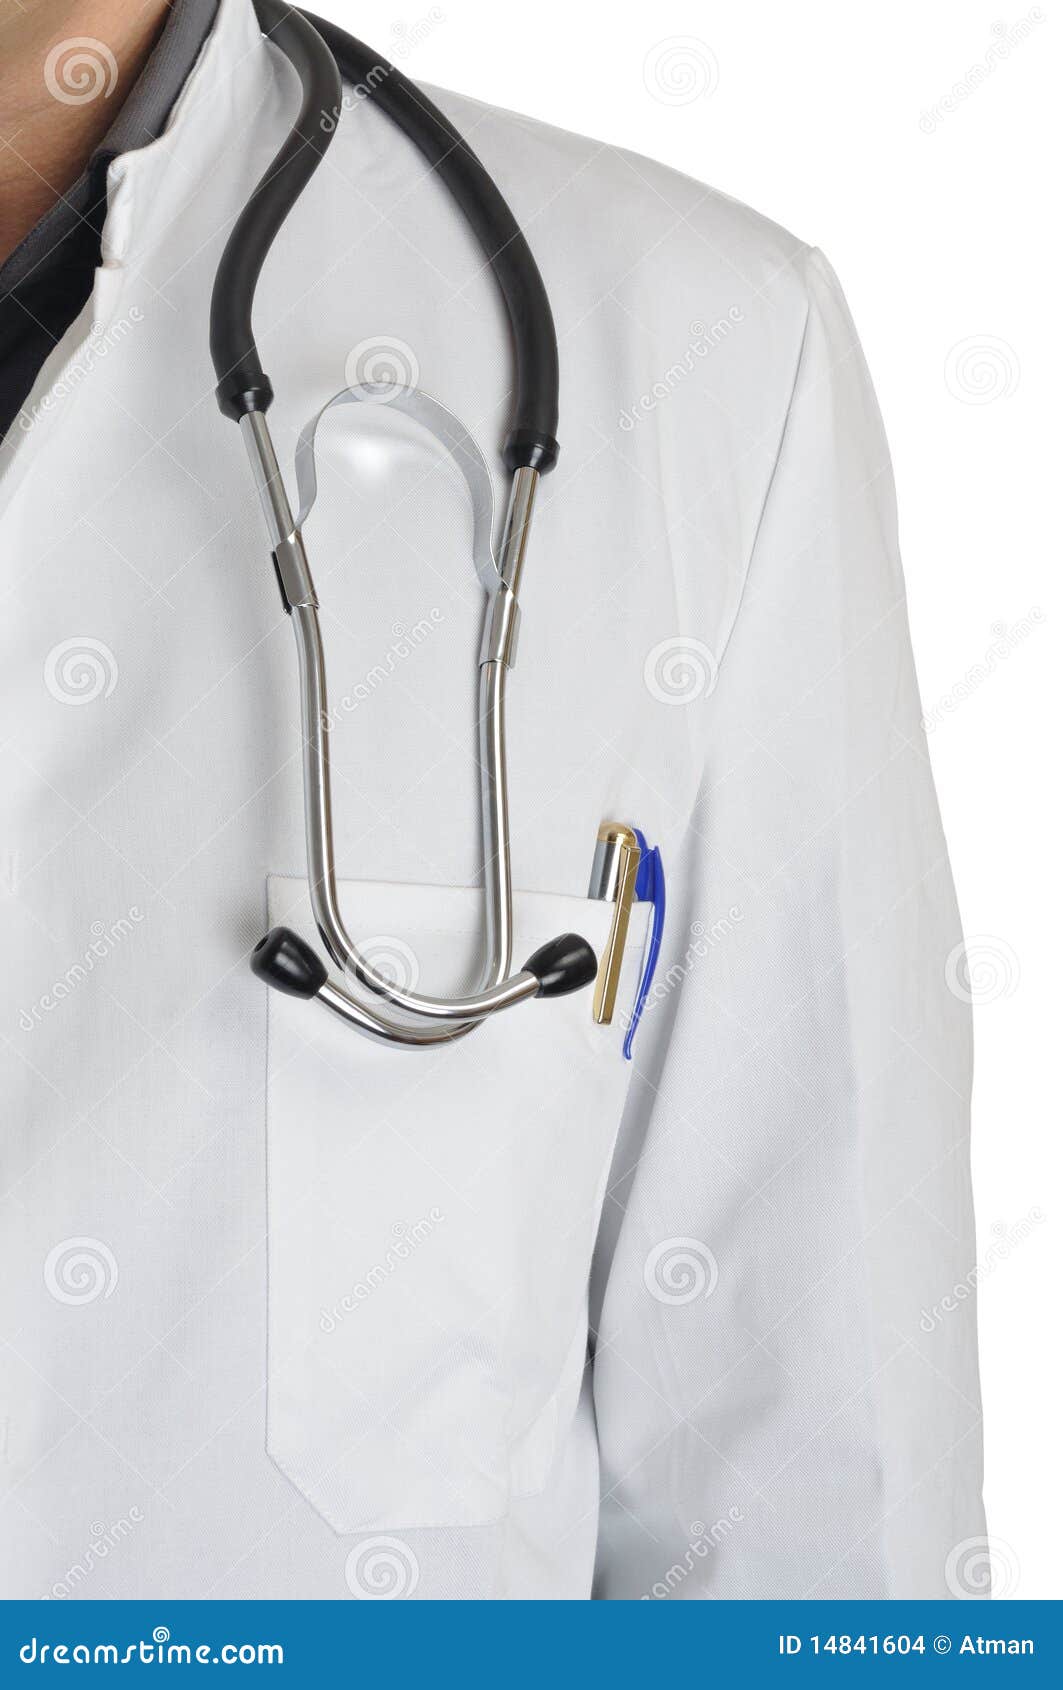 Doctor stock photo. Image of medicine, pocket, apron - 14841604